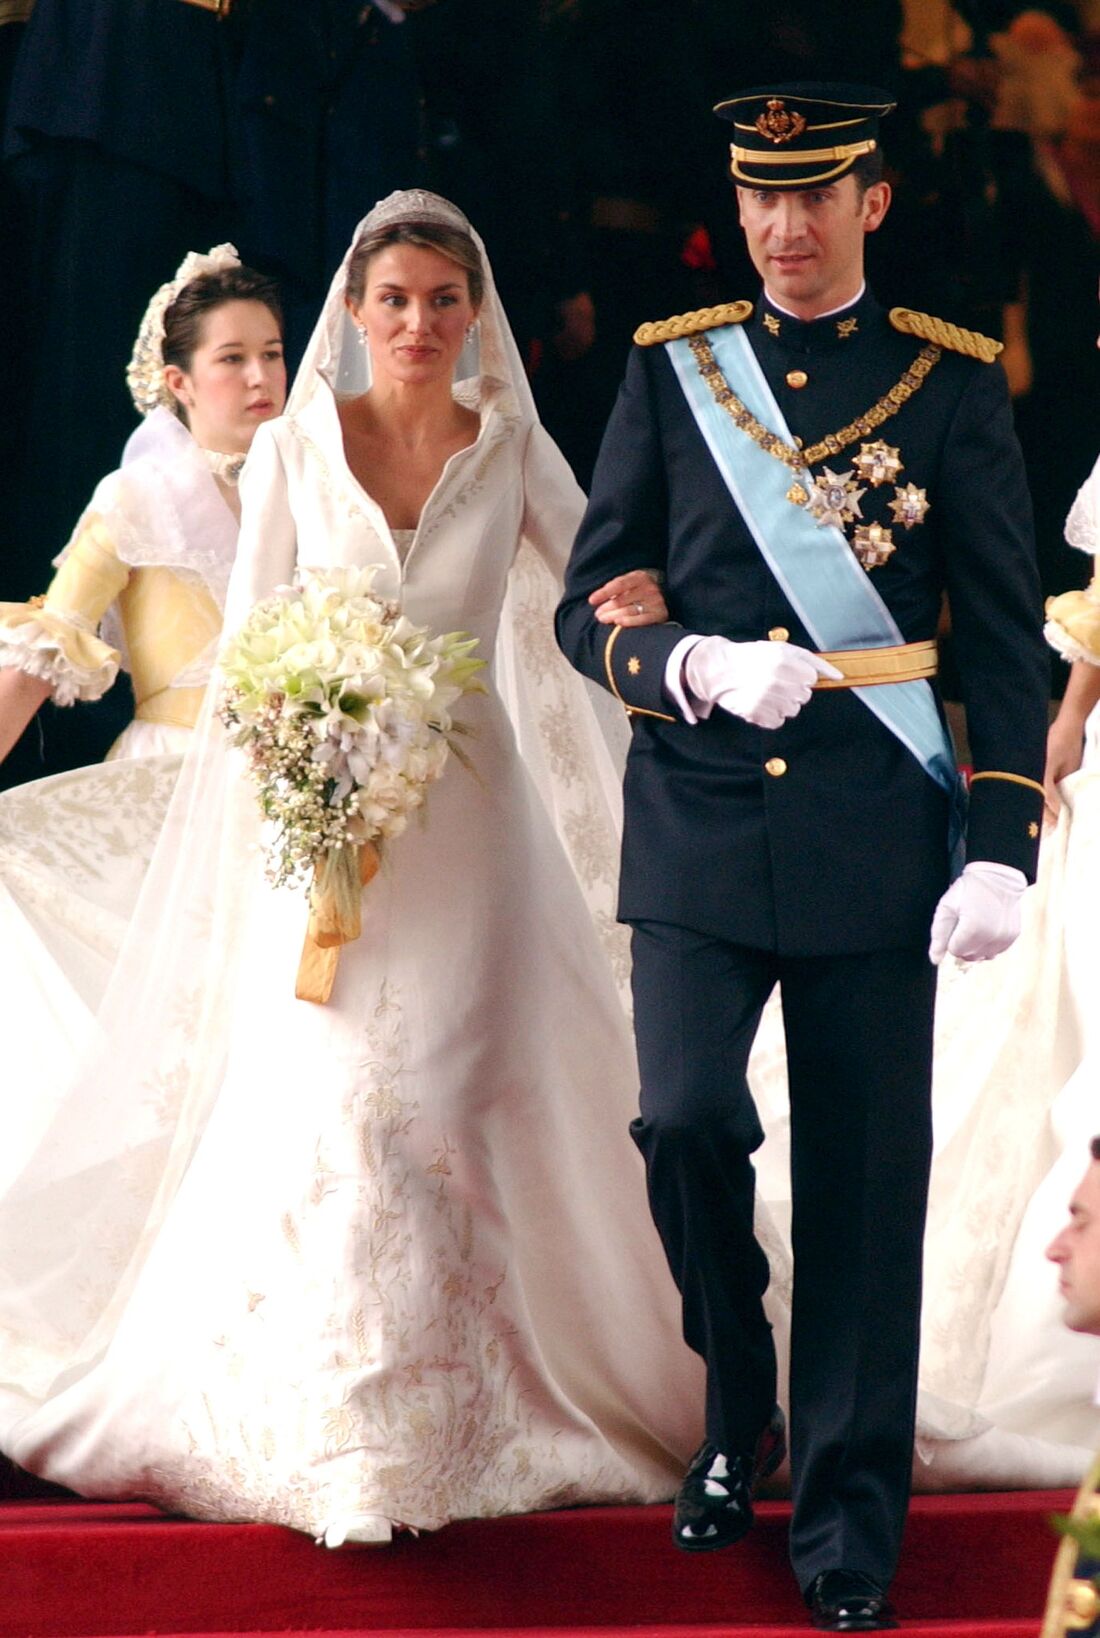 Queen Letizia royal wedding dress designed by Spanish royal couturier Manuel Pertegaz 